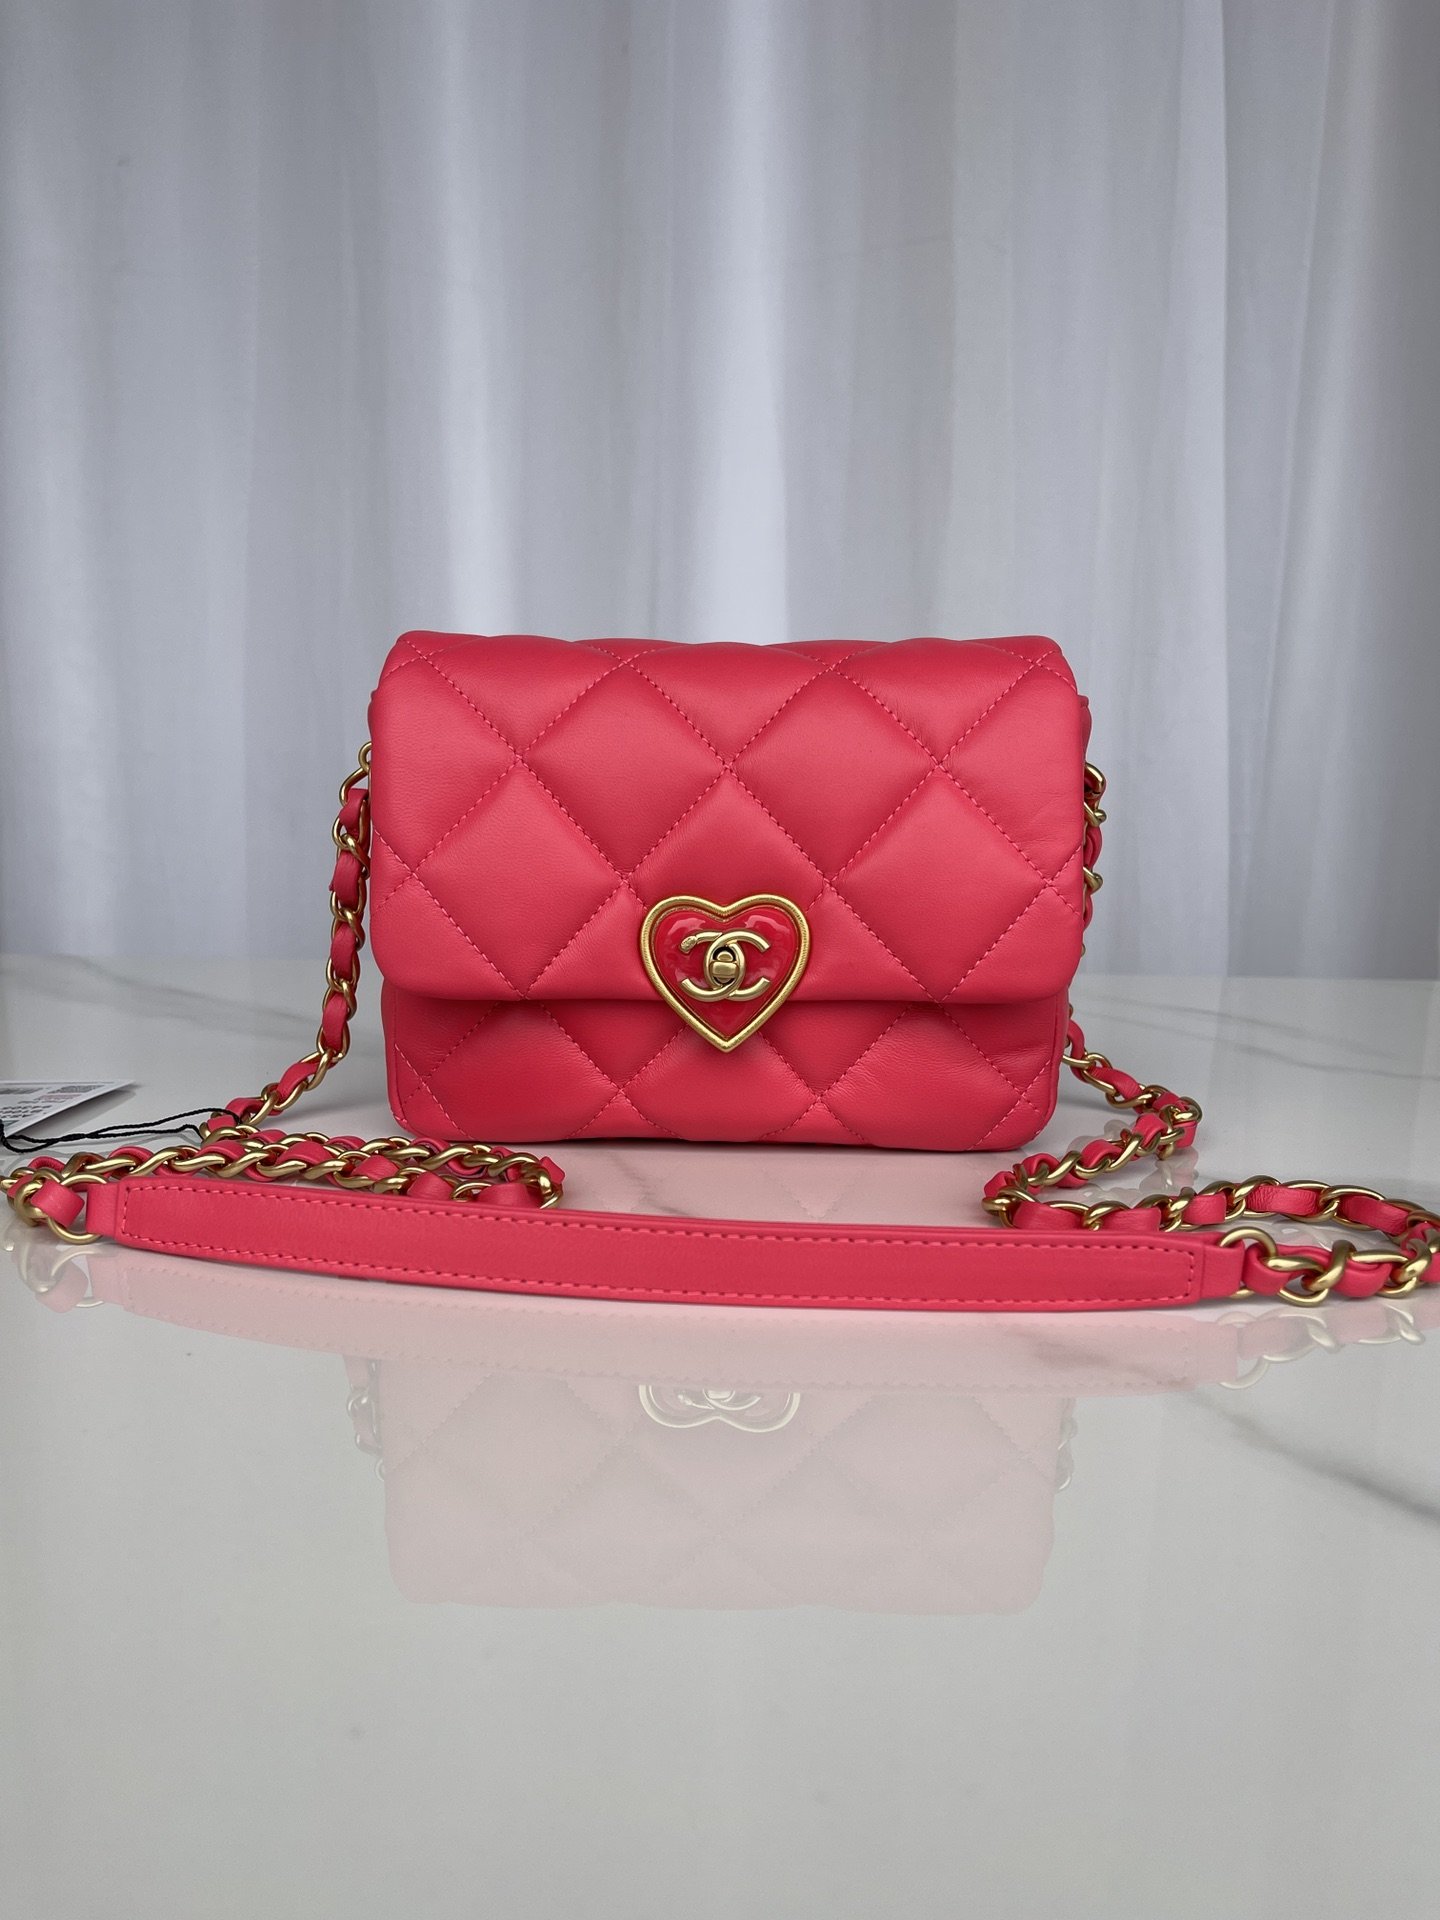 A bag Mini Flap Bag AS3979 18 cm, red